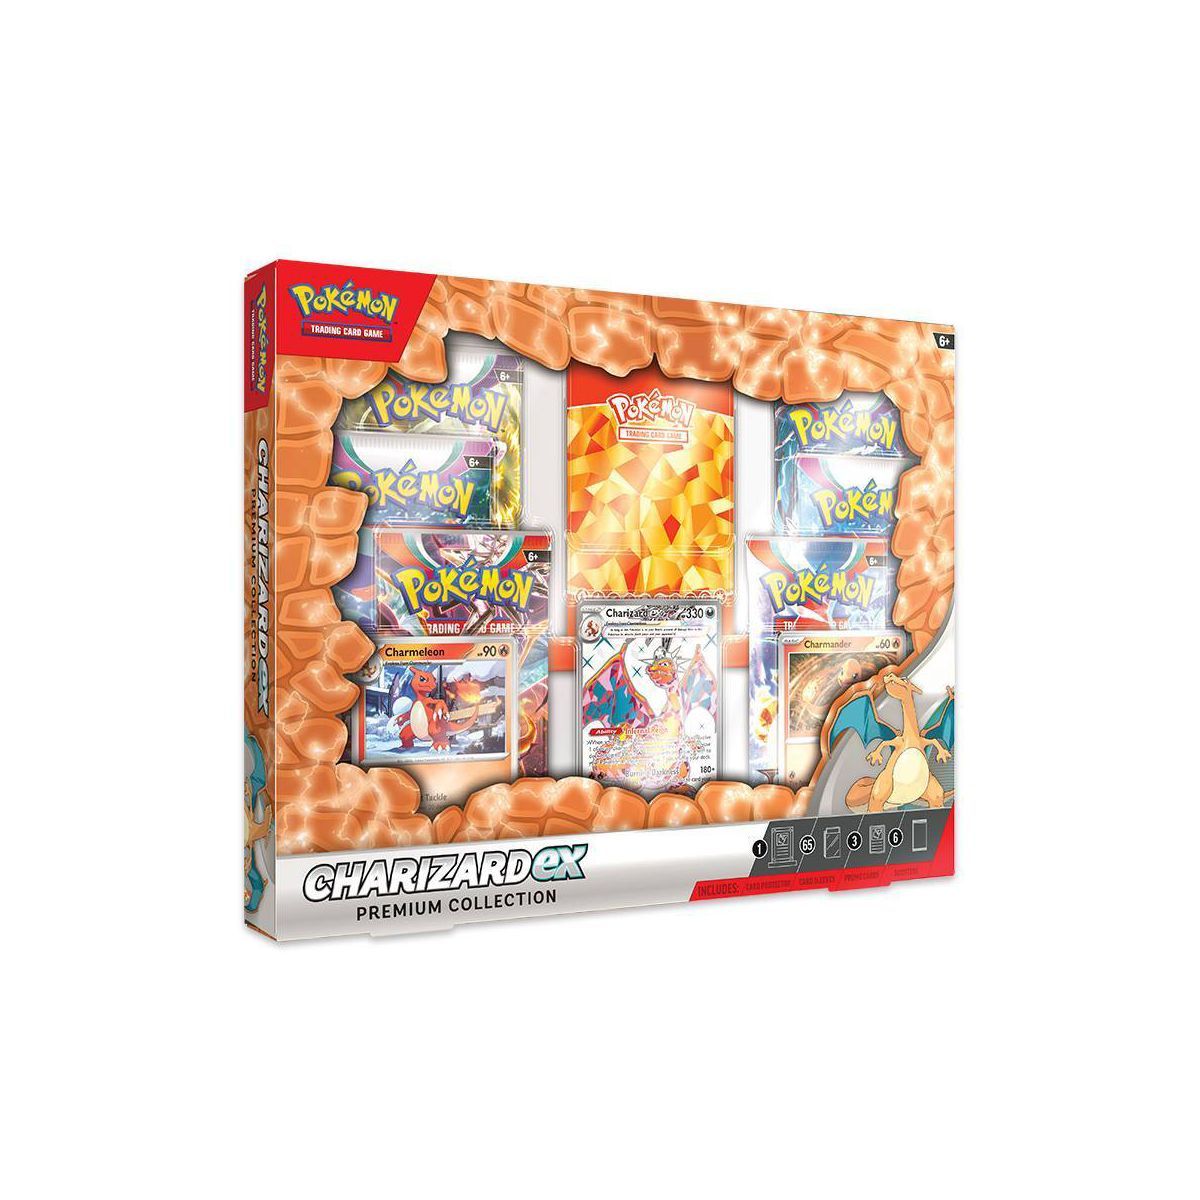 Pokémon Trading Card Game: Charizard ex Premium Collection | Target